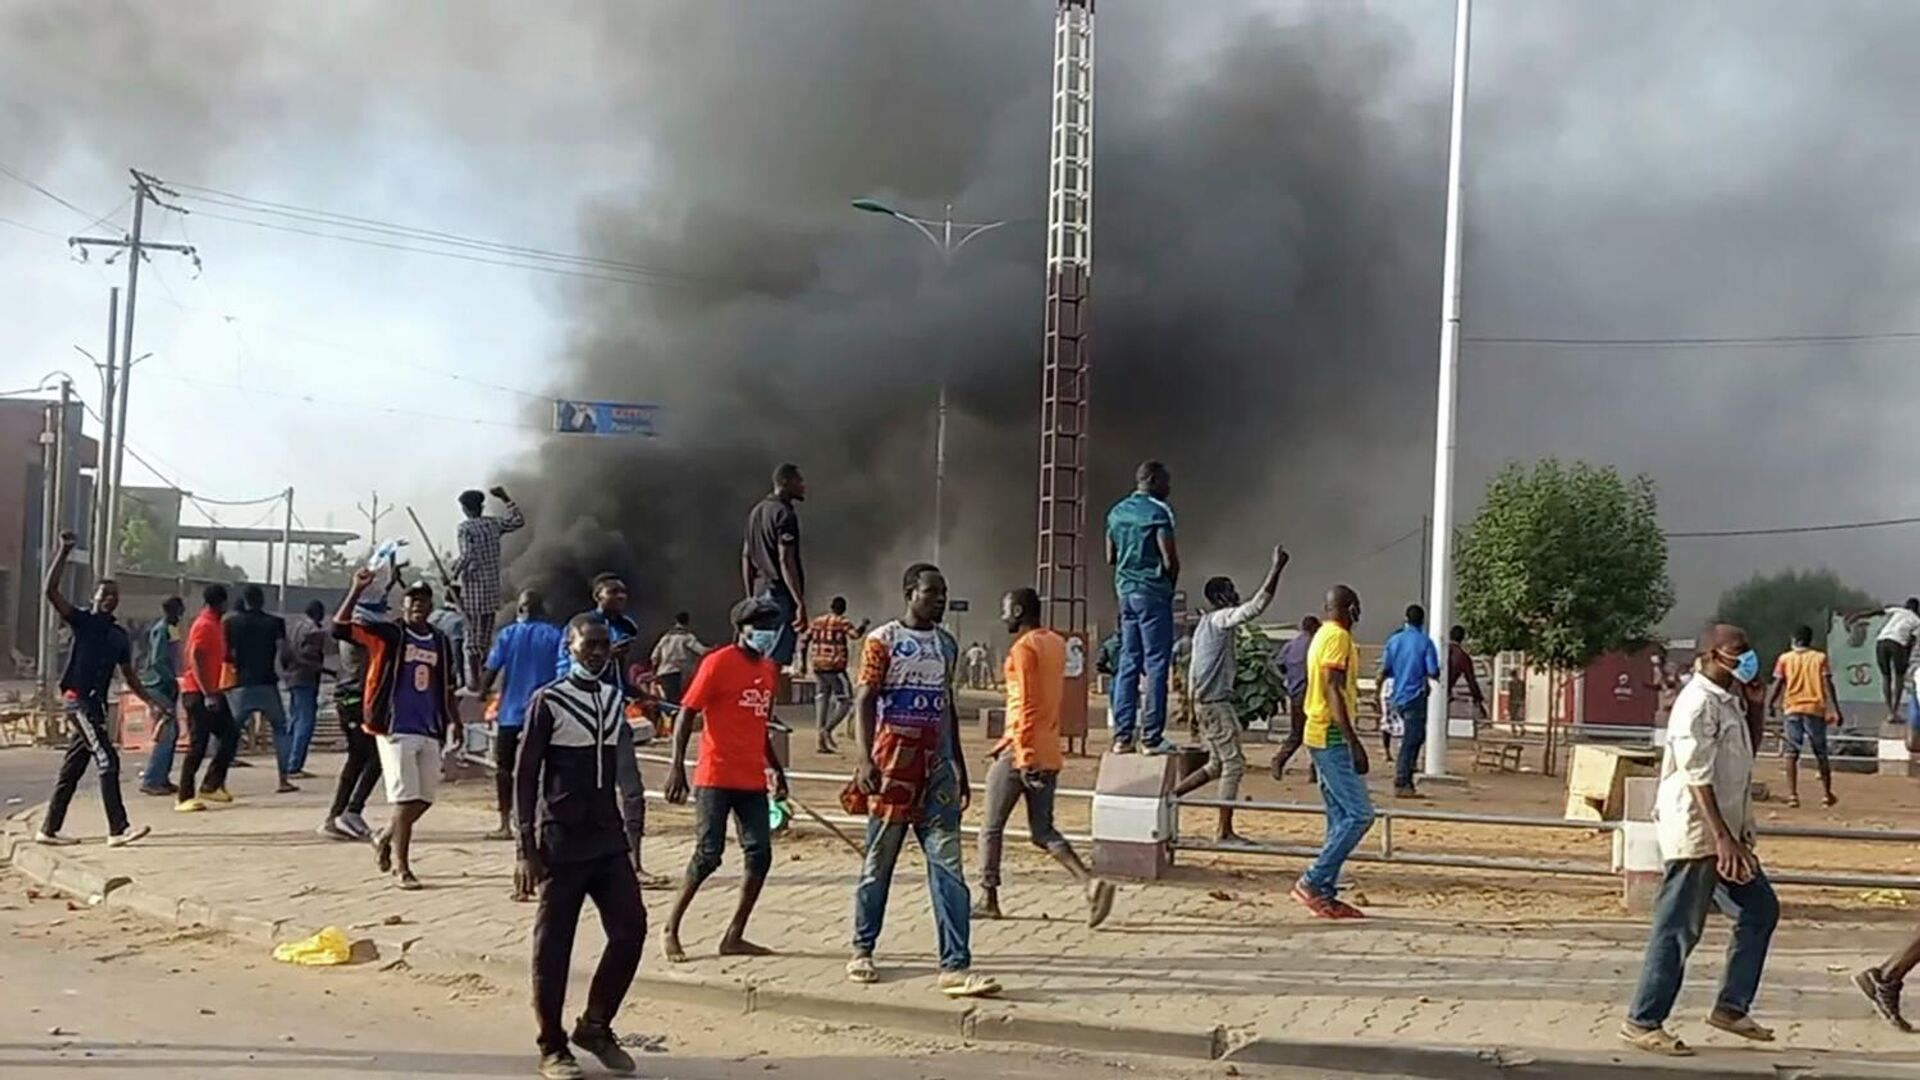 Anti-government demonstrators set a barricade on fire during clashes in N'Djamena, Chad - Sputnik International, 1920, 25.10.2022